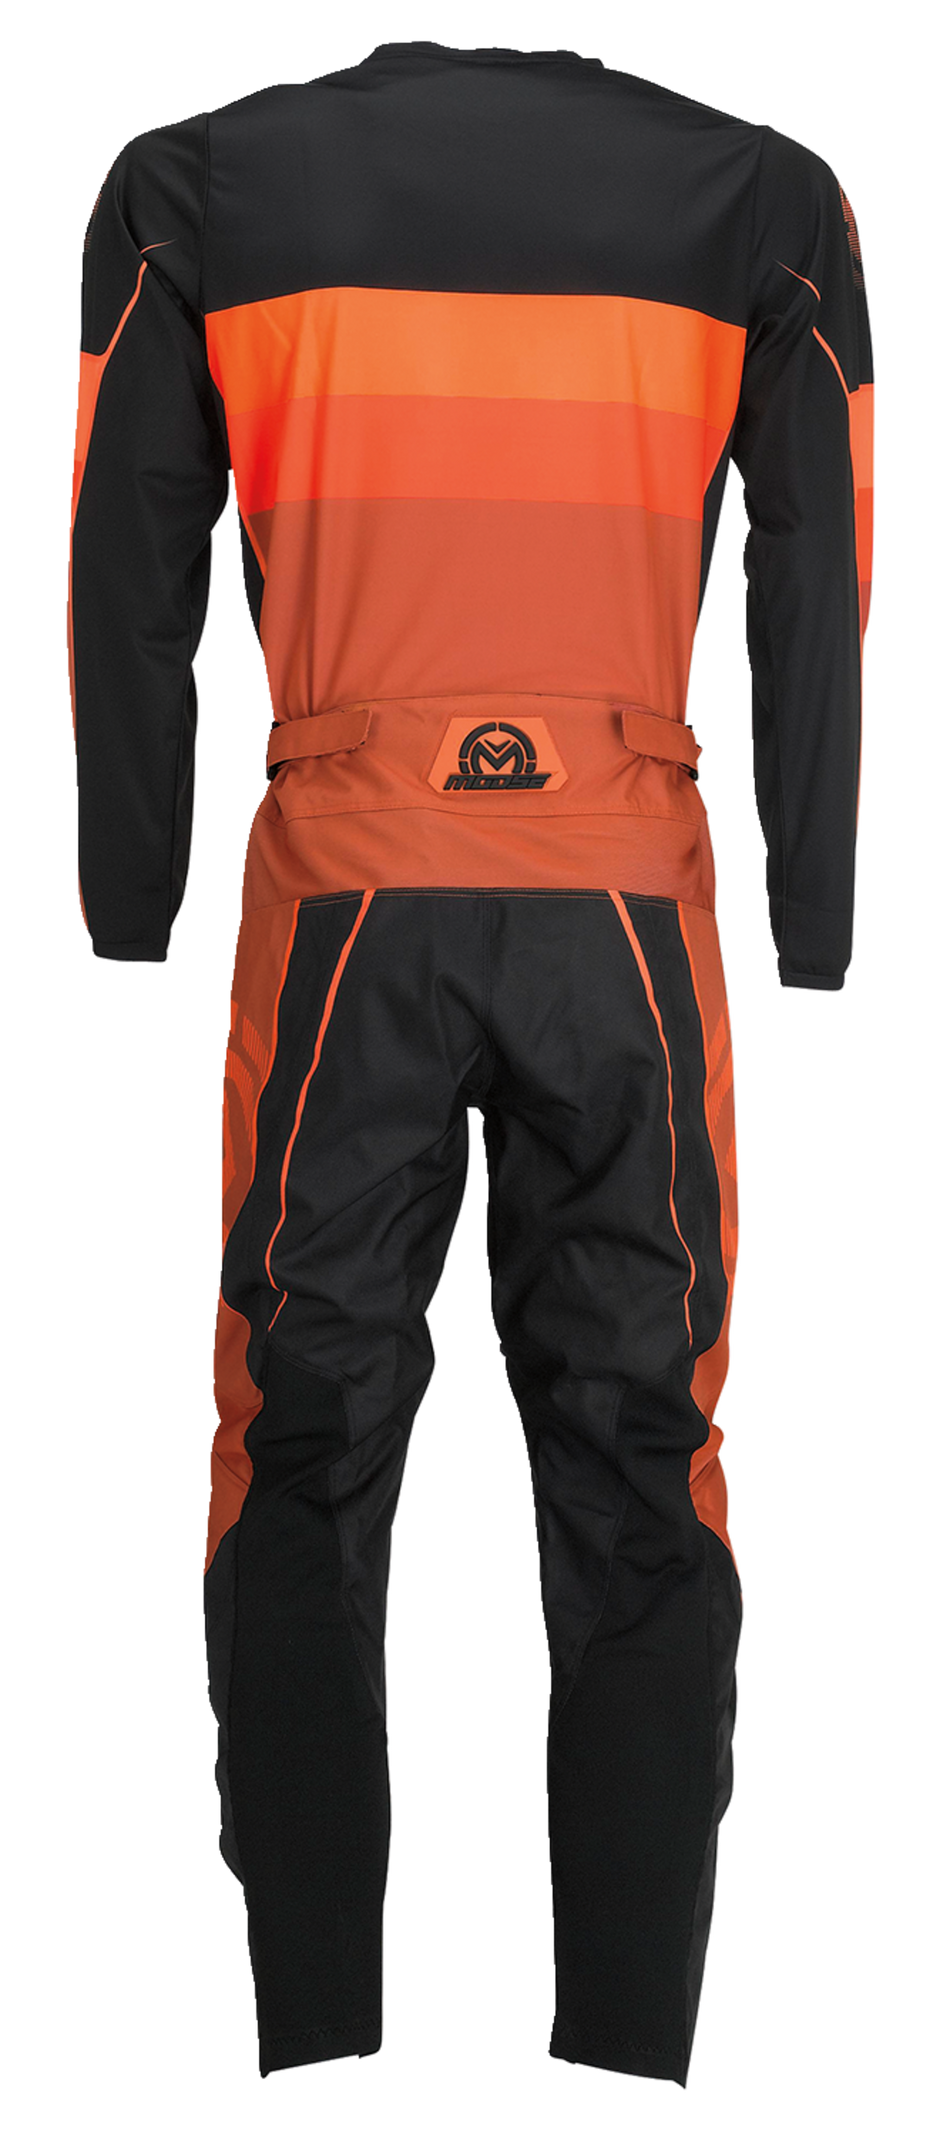 MOOSE RACING Qualifier® Jersey - Orange/Gray - Medium 2910-7197